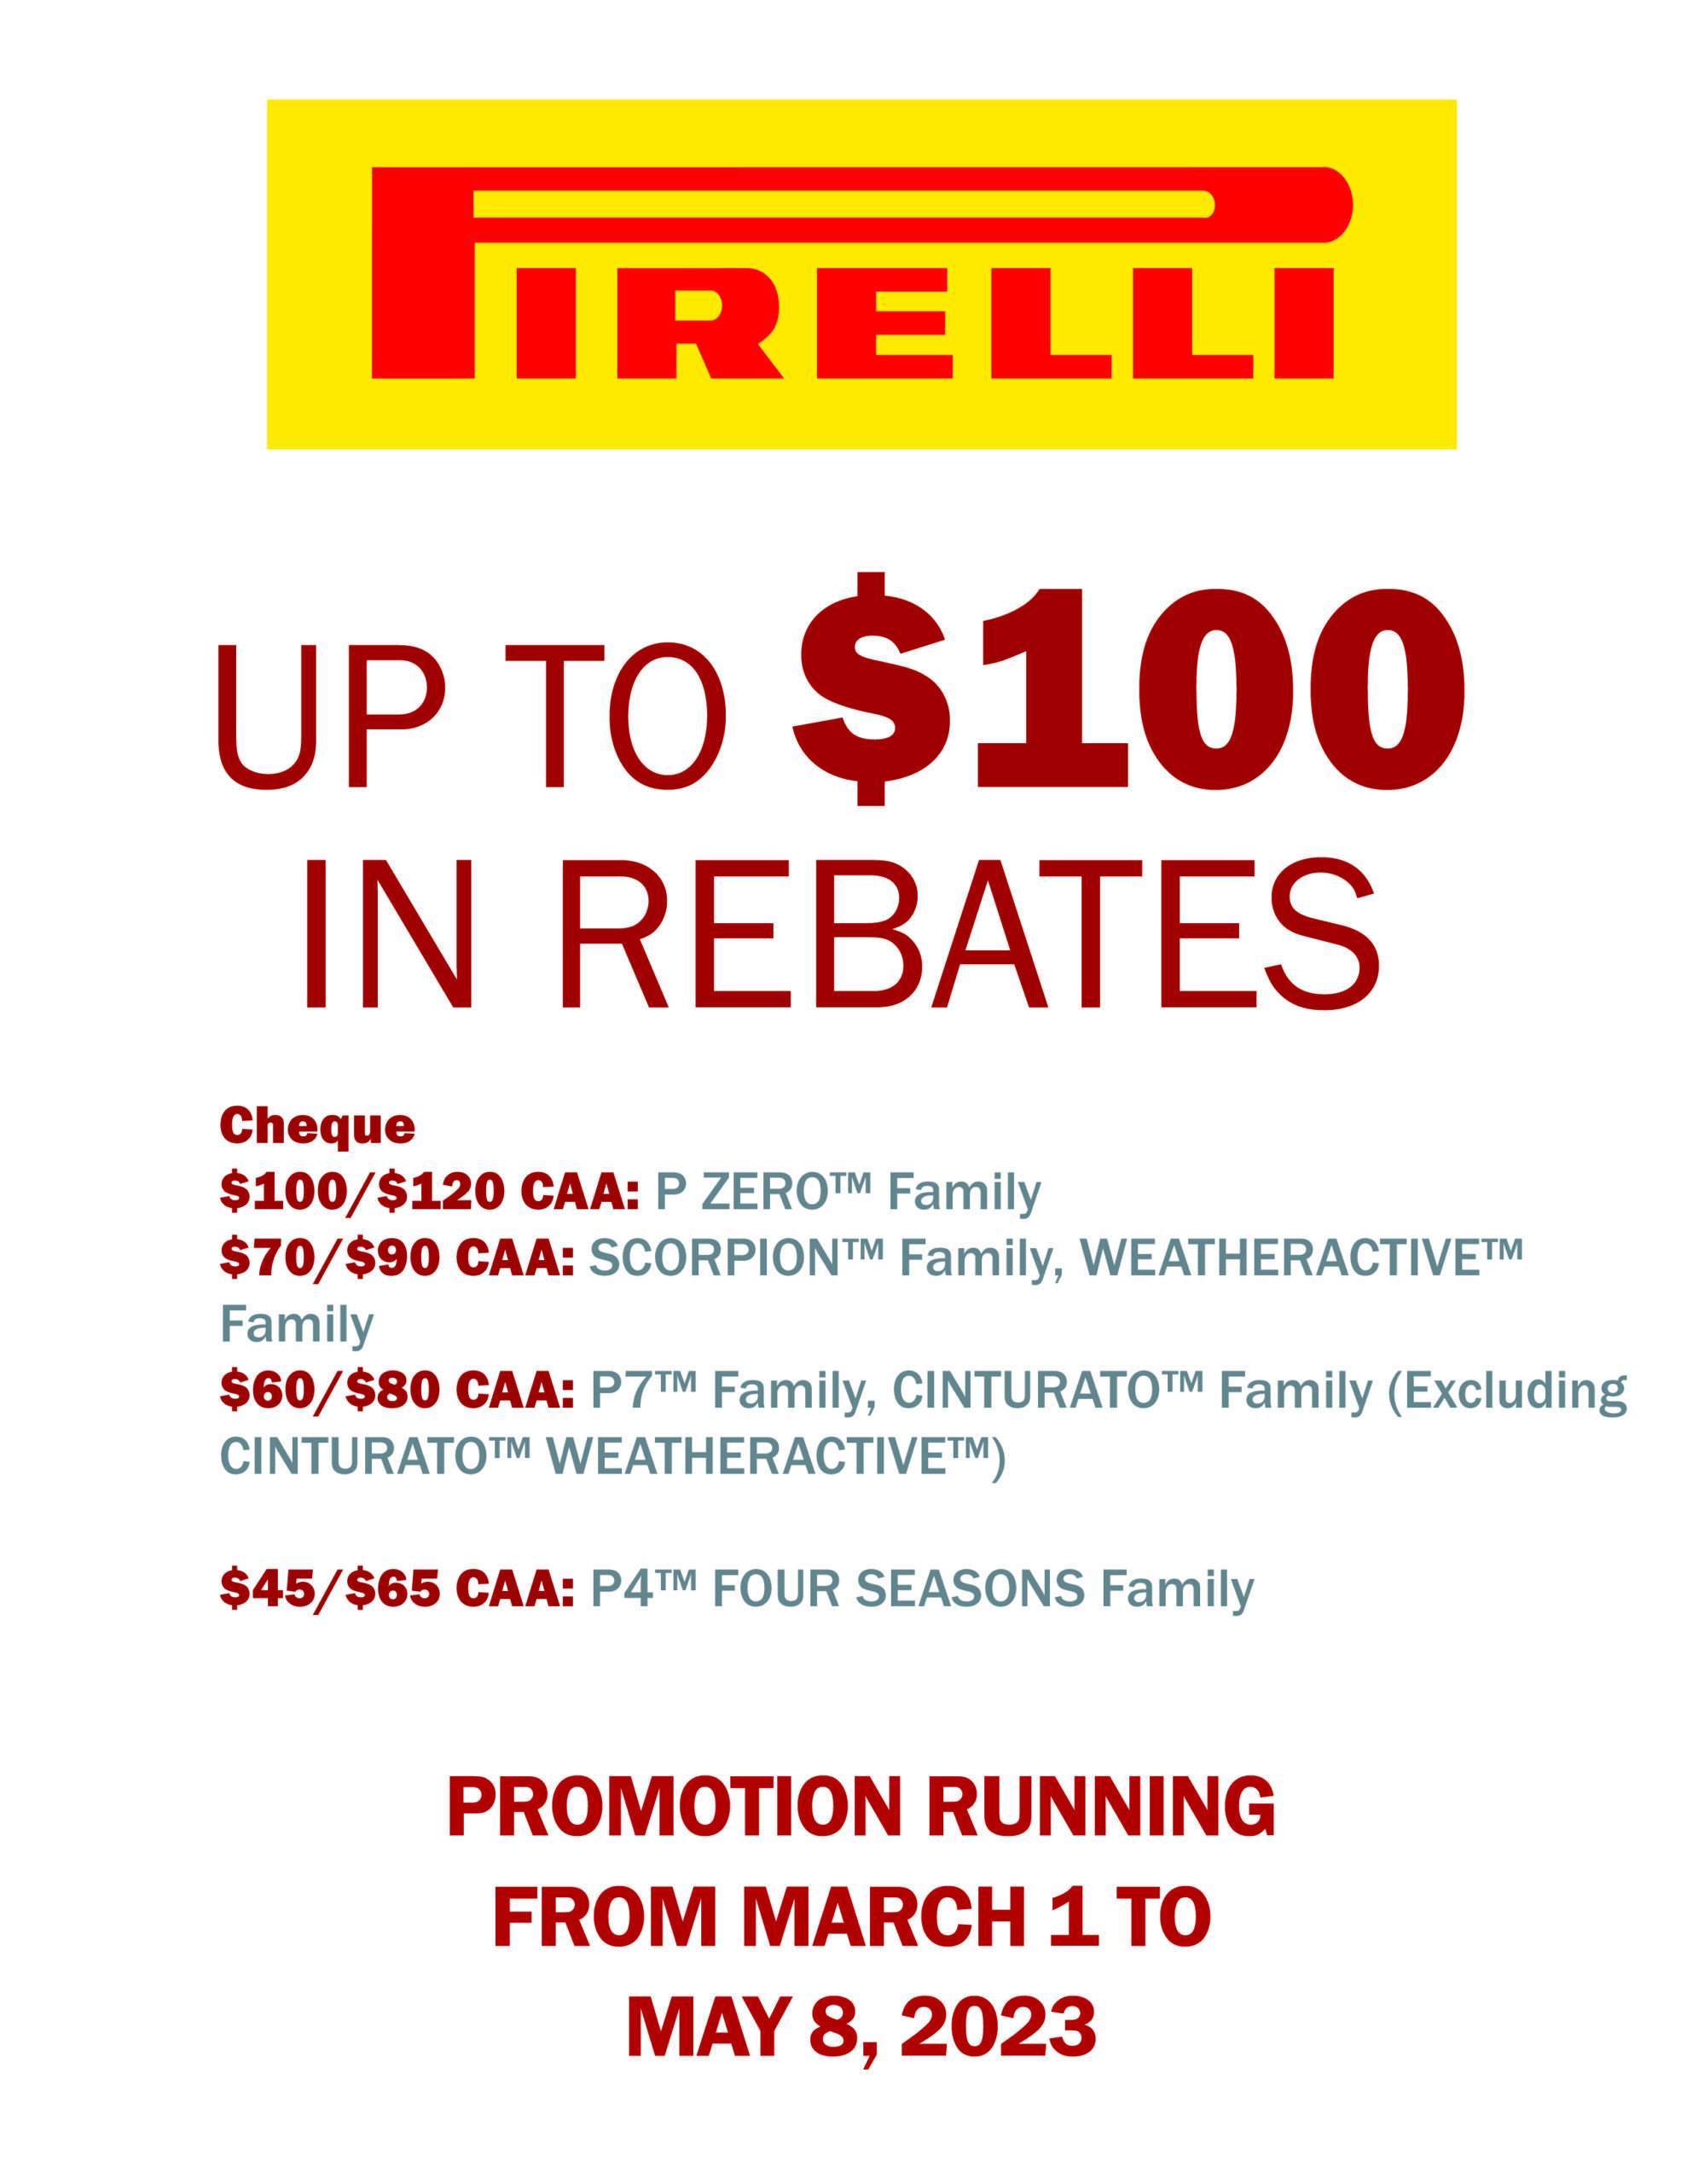 Pirelli Rebate 2023 Usa